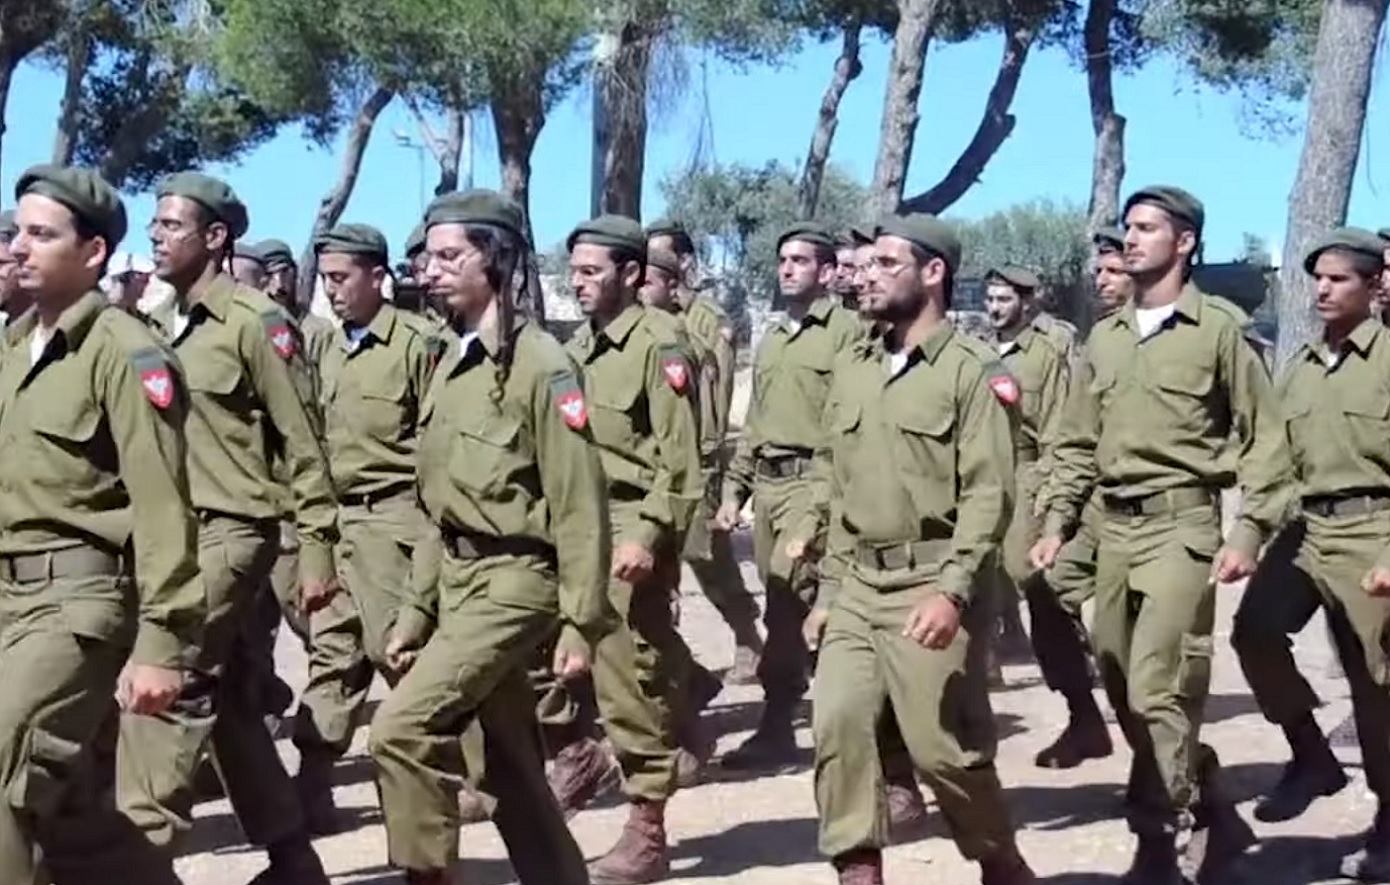 Netzah Yehuda: Το τάγμα υπερορθόδοξων του ισραηλινού στρατού στο οποίο οι ΗΠΑ θα επιβάλλουν κυρώσεις